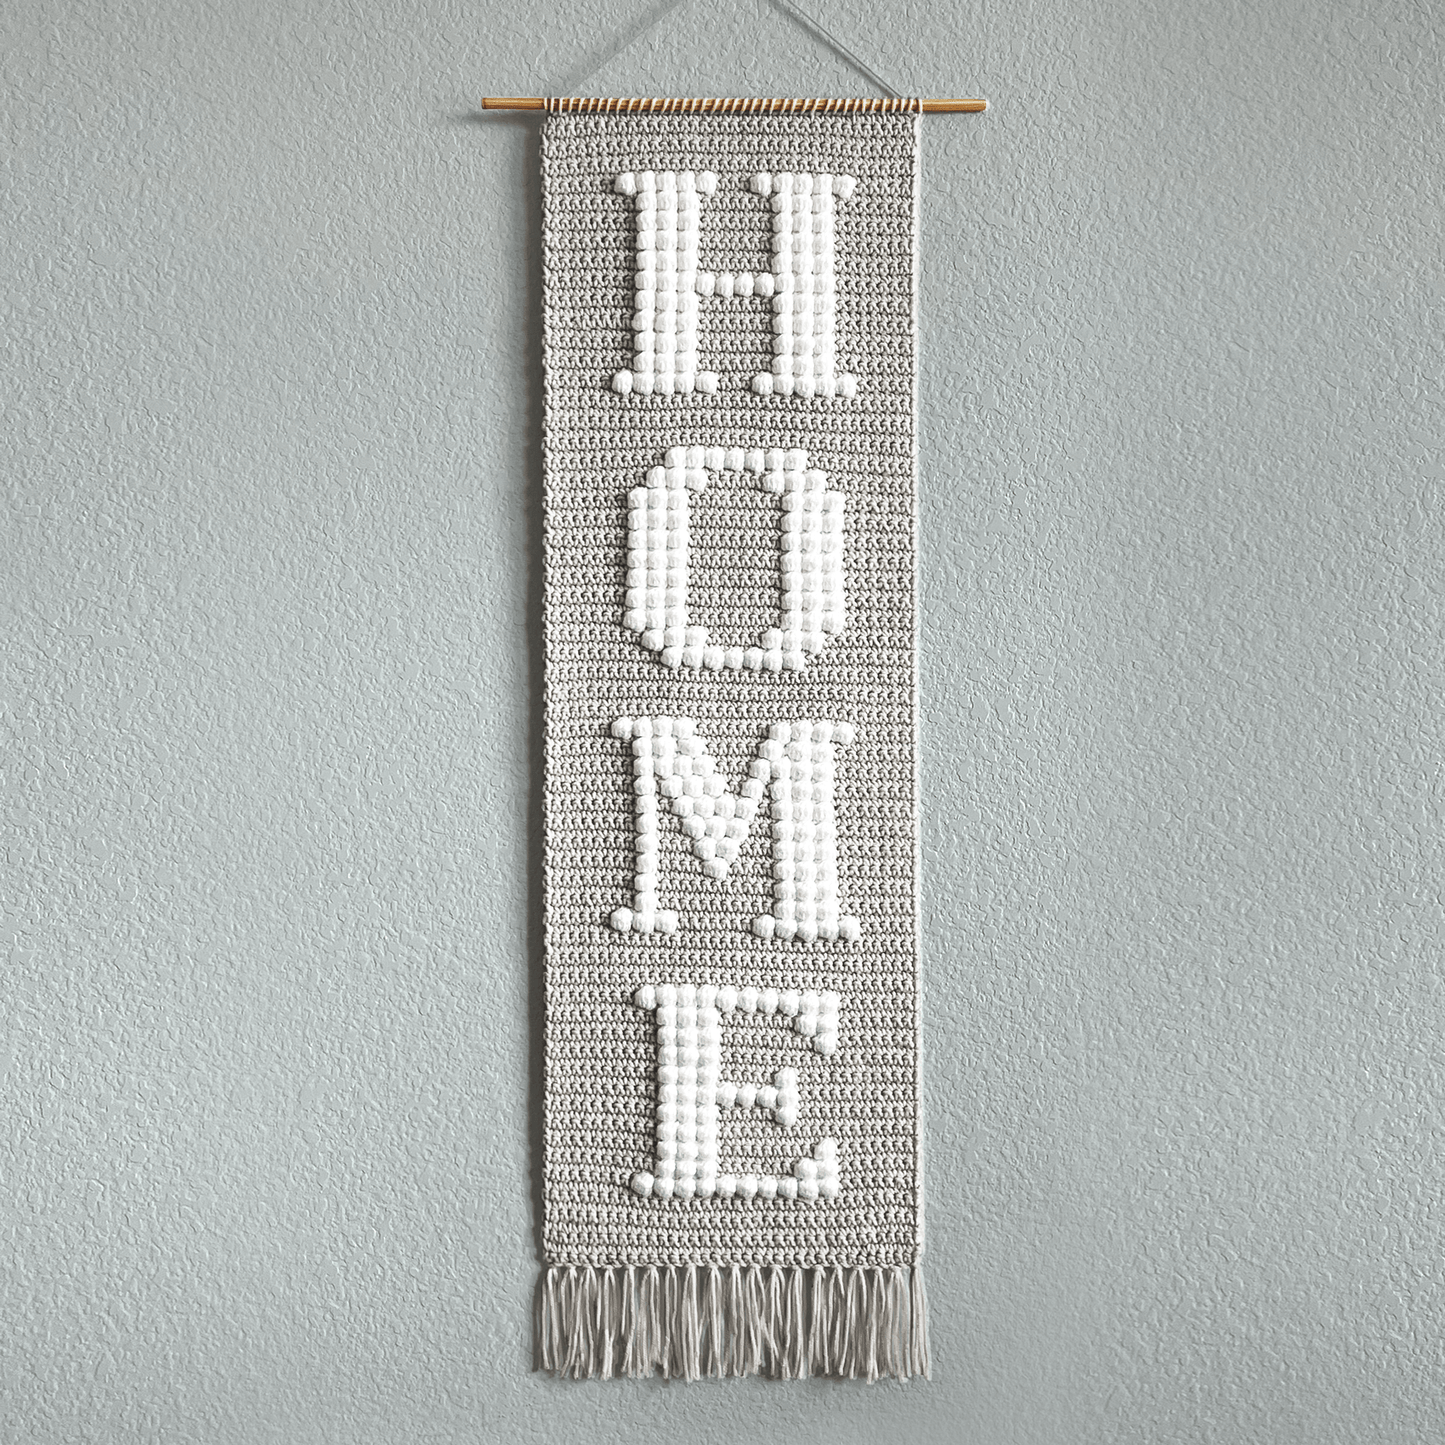 Home Wall Hanging | Crochet Pattern